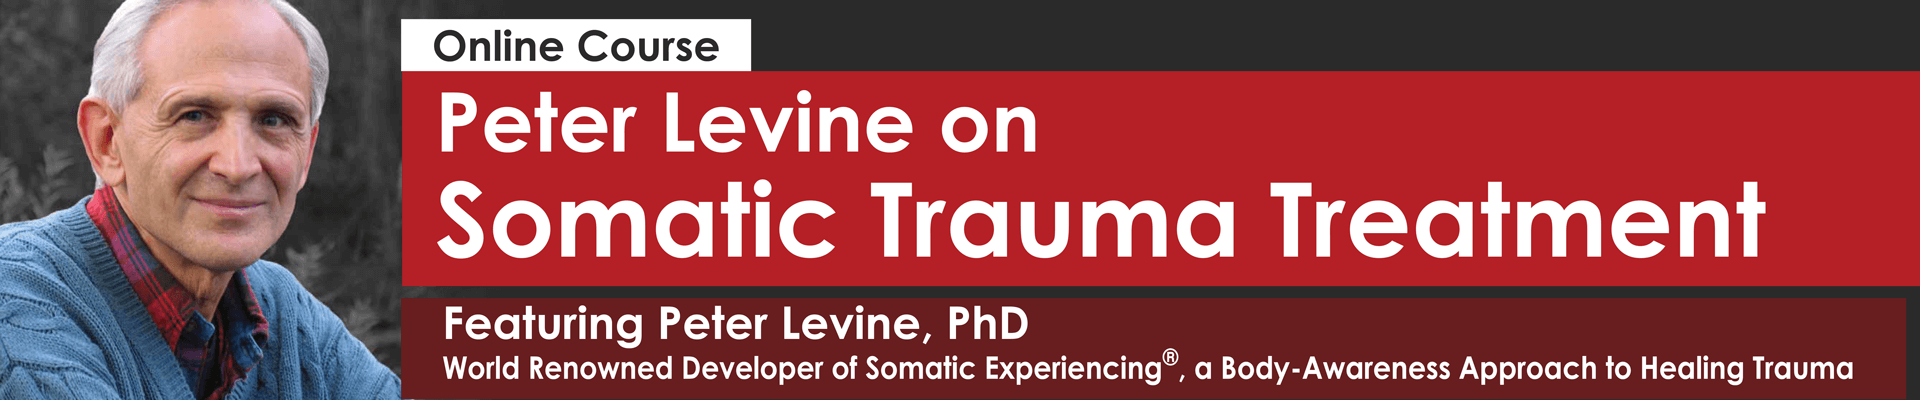 Peter Levine - Peter Levine on Somatic Trauma Treatment